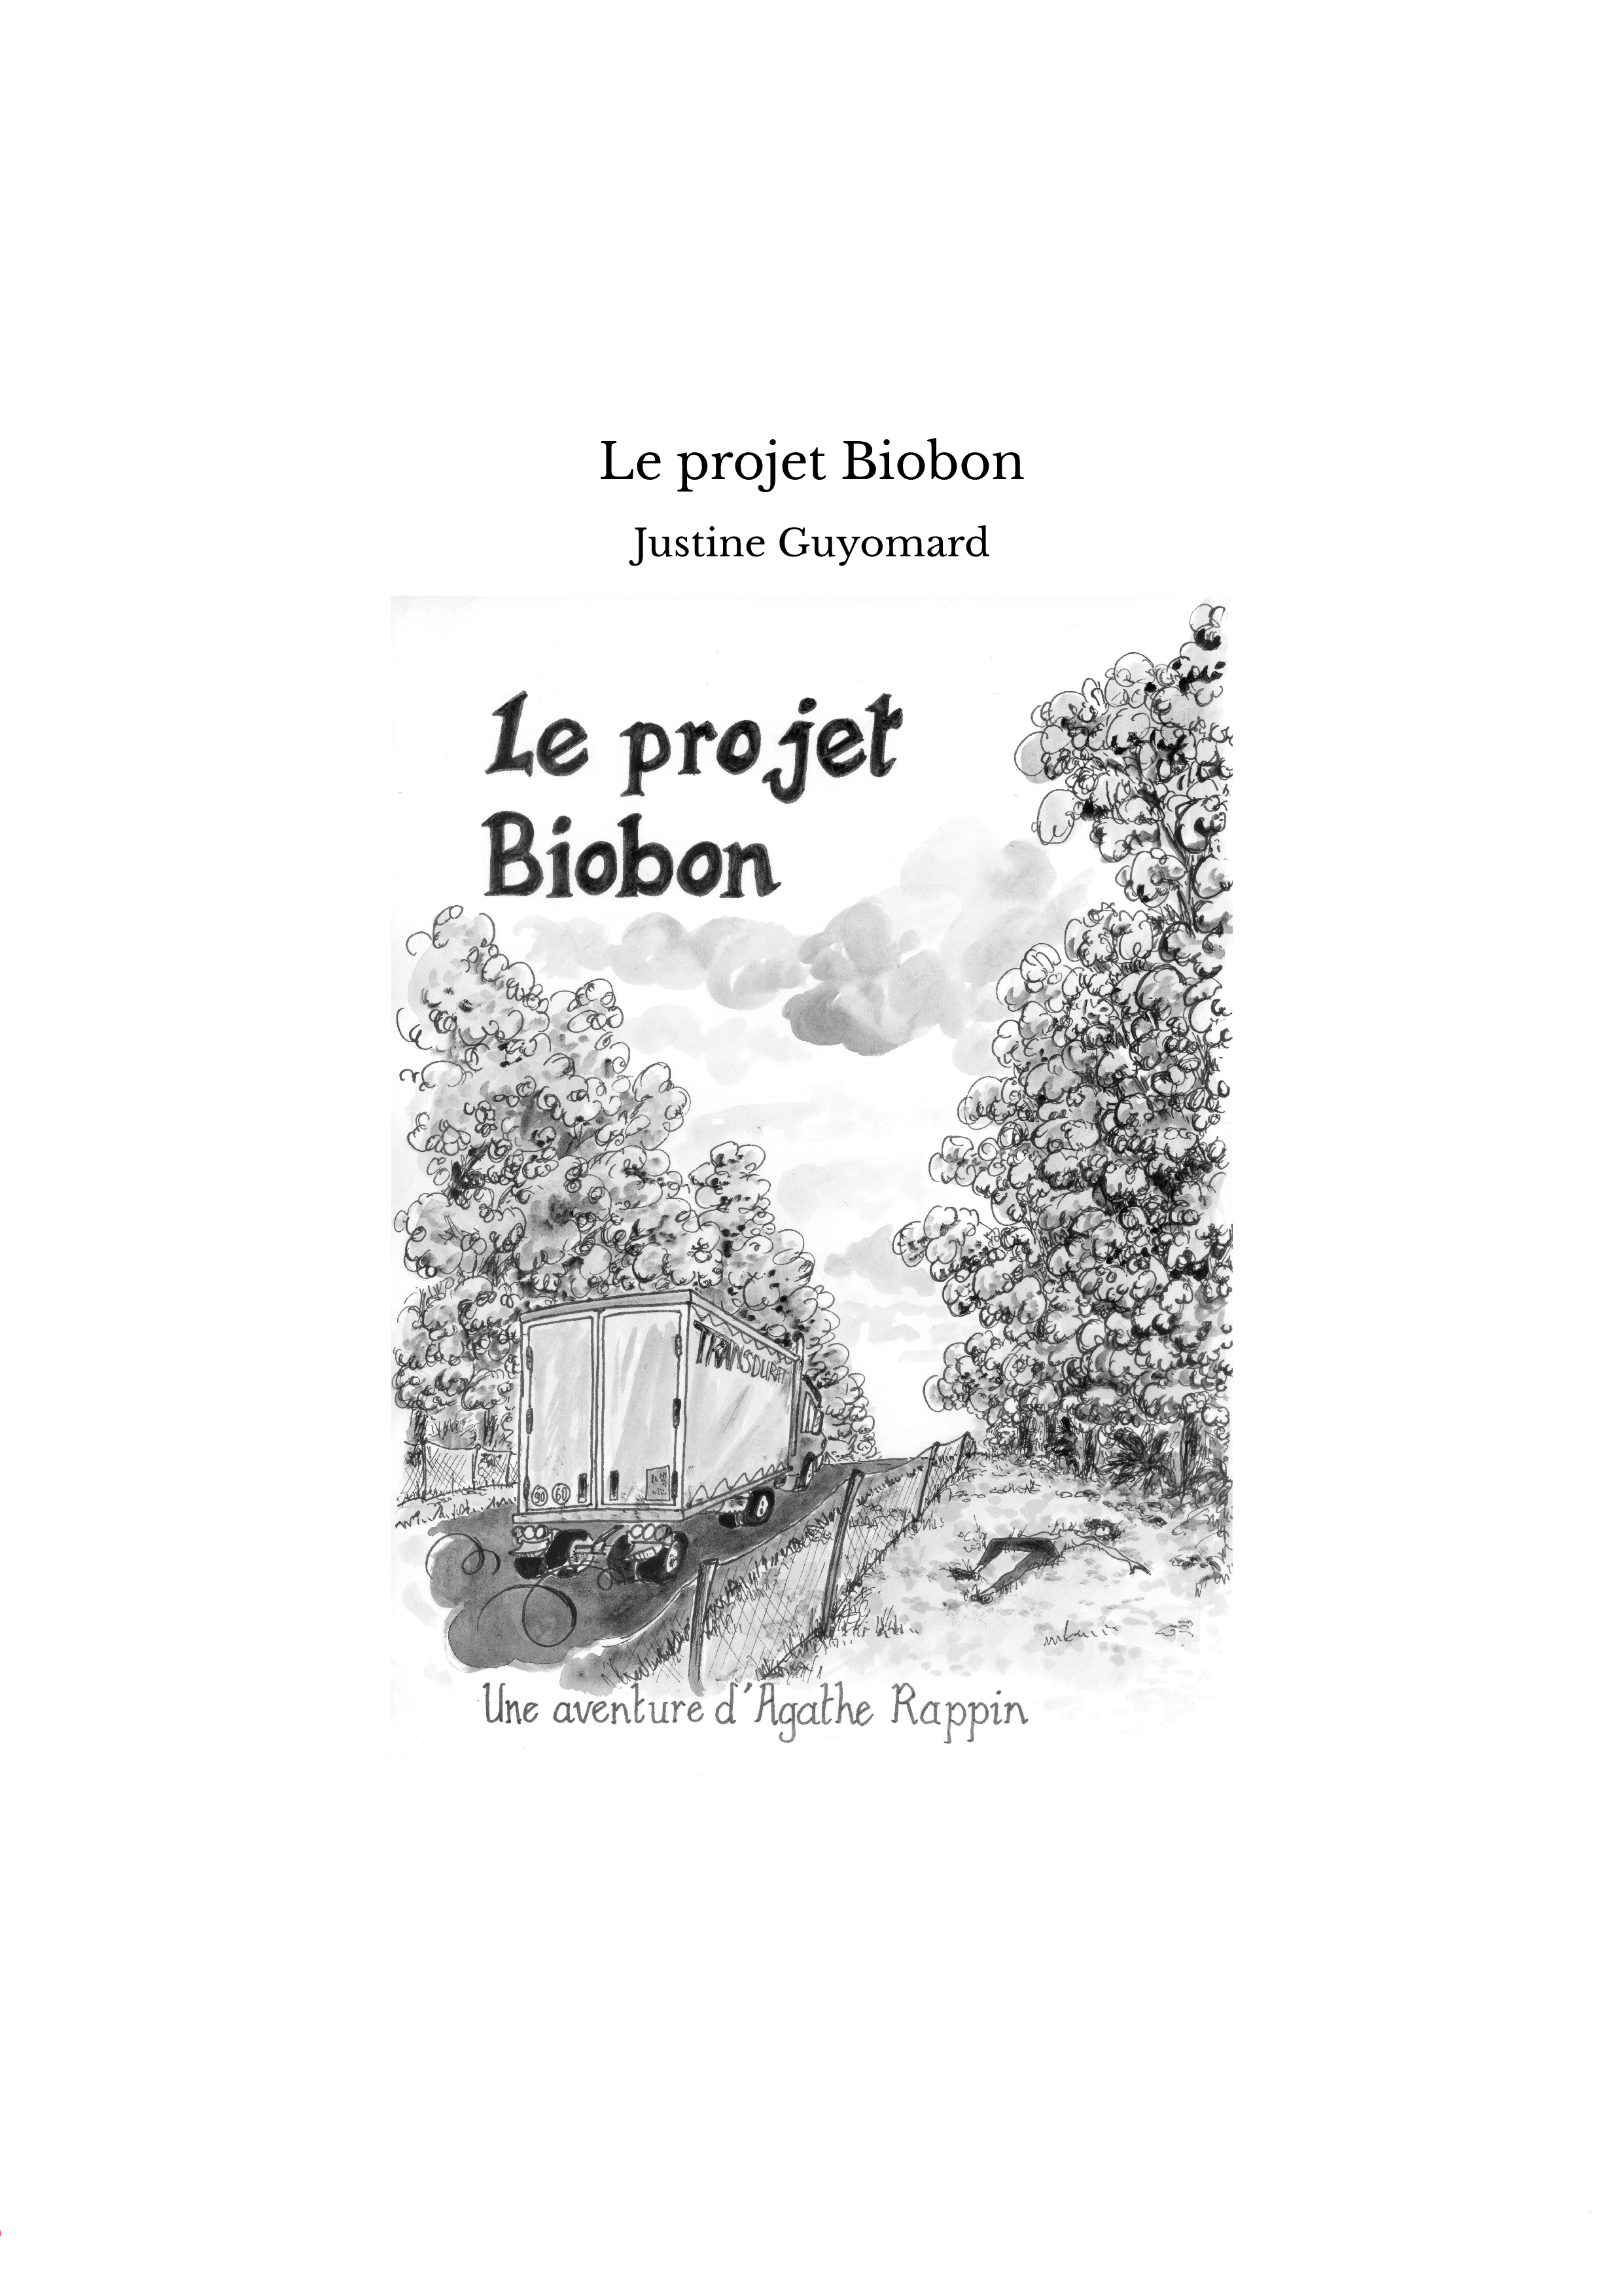 Le projet Biobon